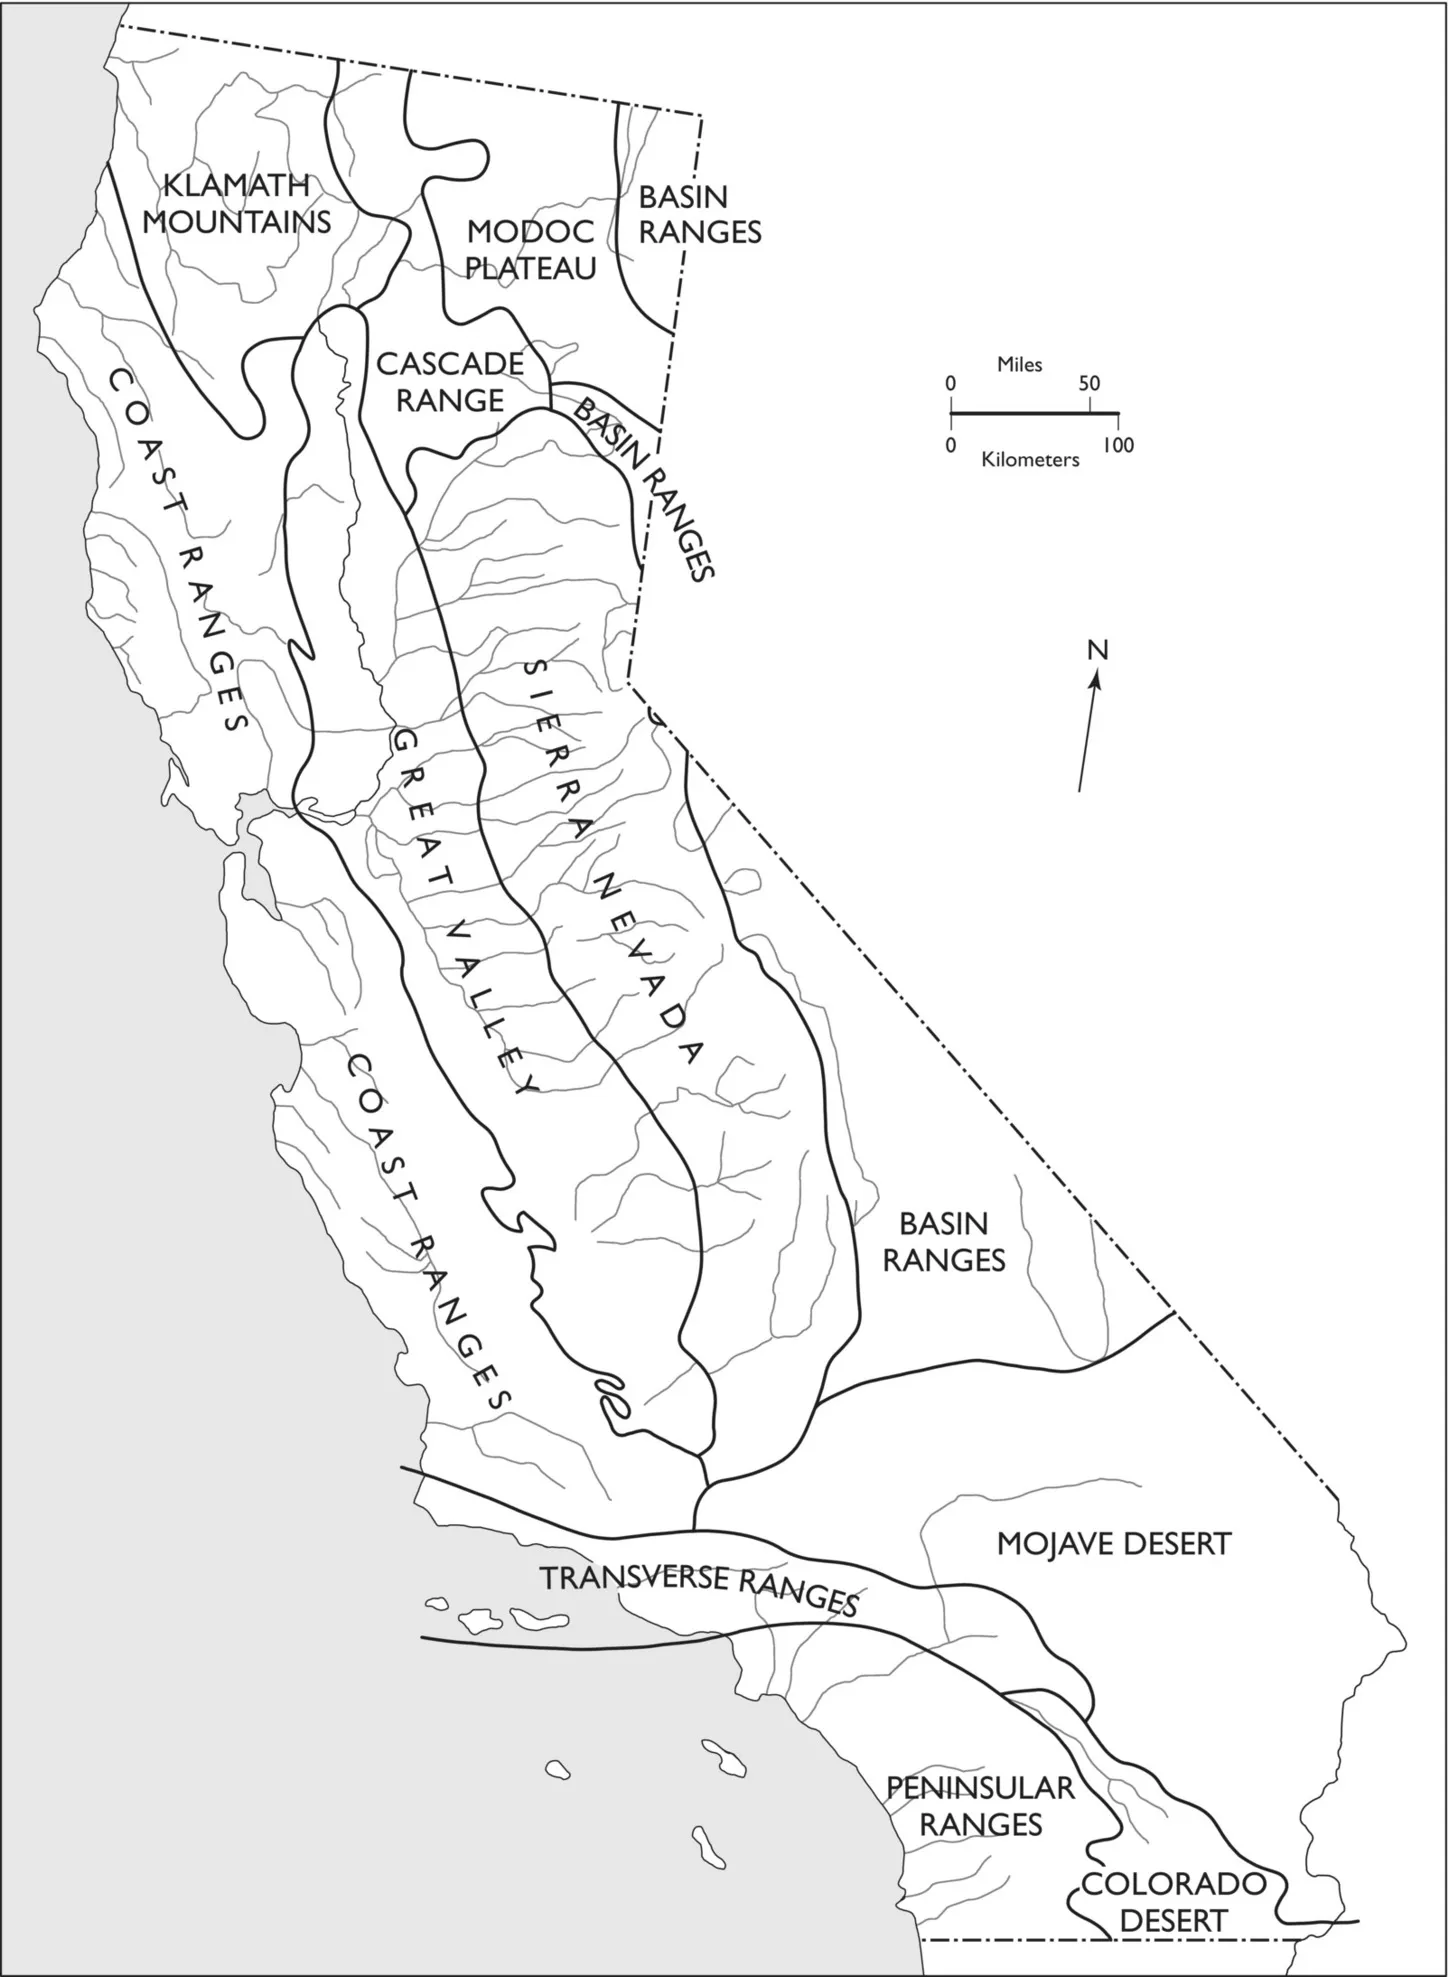 Map of California displaying Great Valley, Coast Ranges, Colorado Desert, Mojave Desert, Sierra Nevada, Modoc Plateau, Klamath Mountains, Peninsular Ranges, etc. with an arrow indicating north.